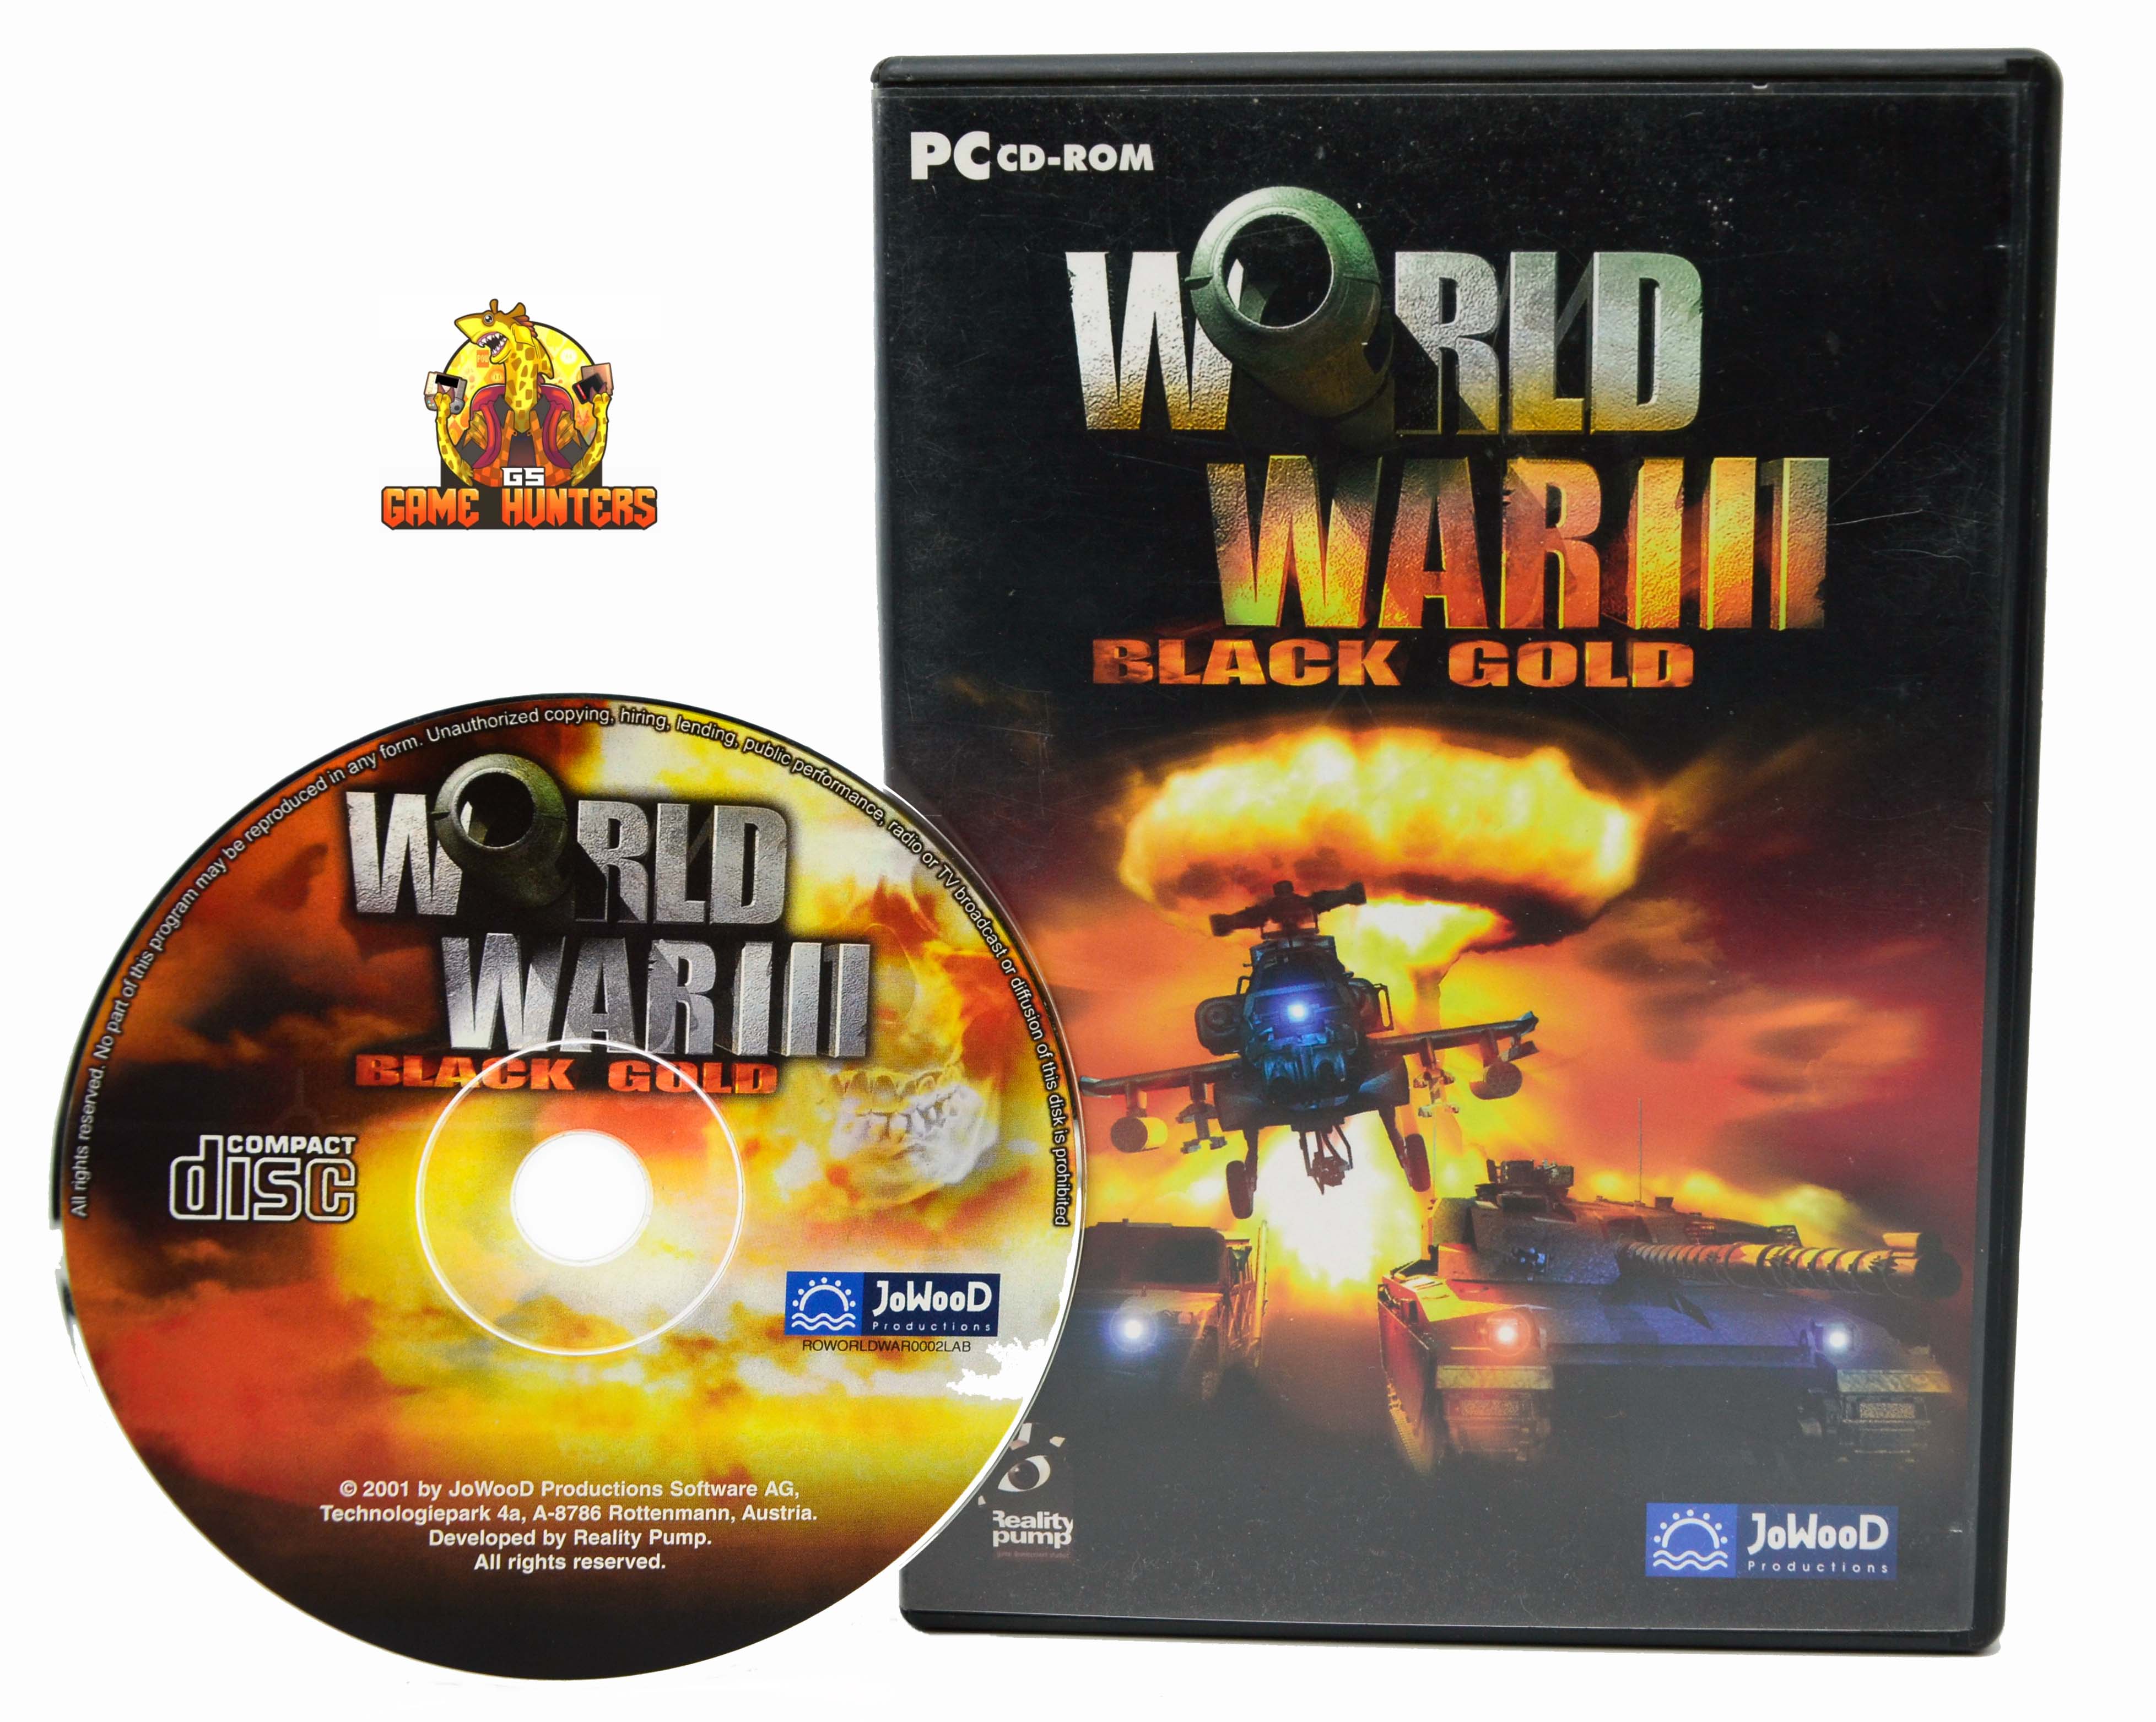 Case & Disc.jpg World War III Black Gold by GSGAMEHUNTERS